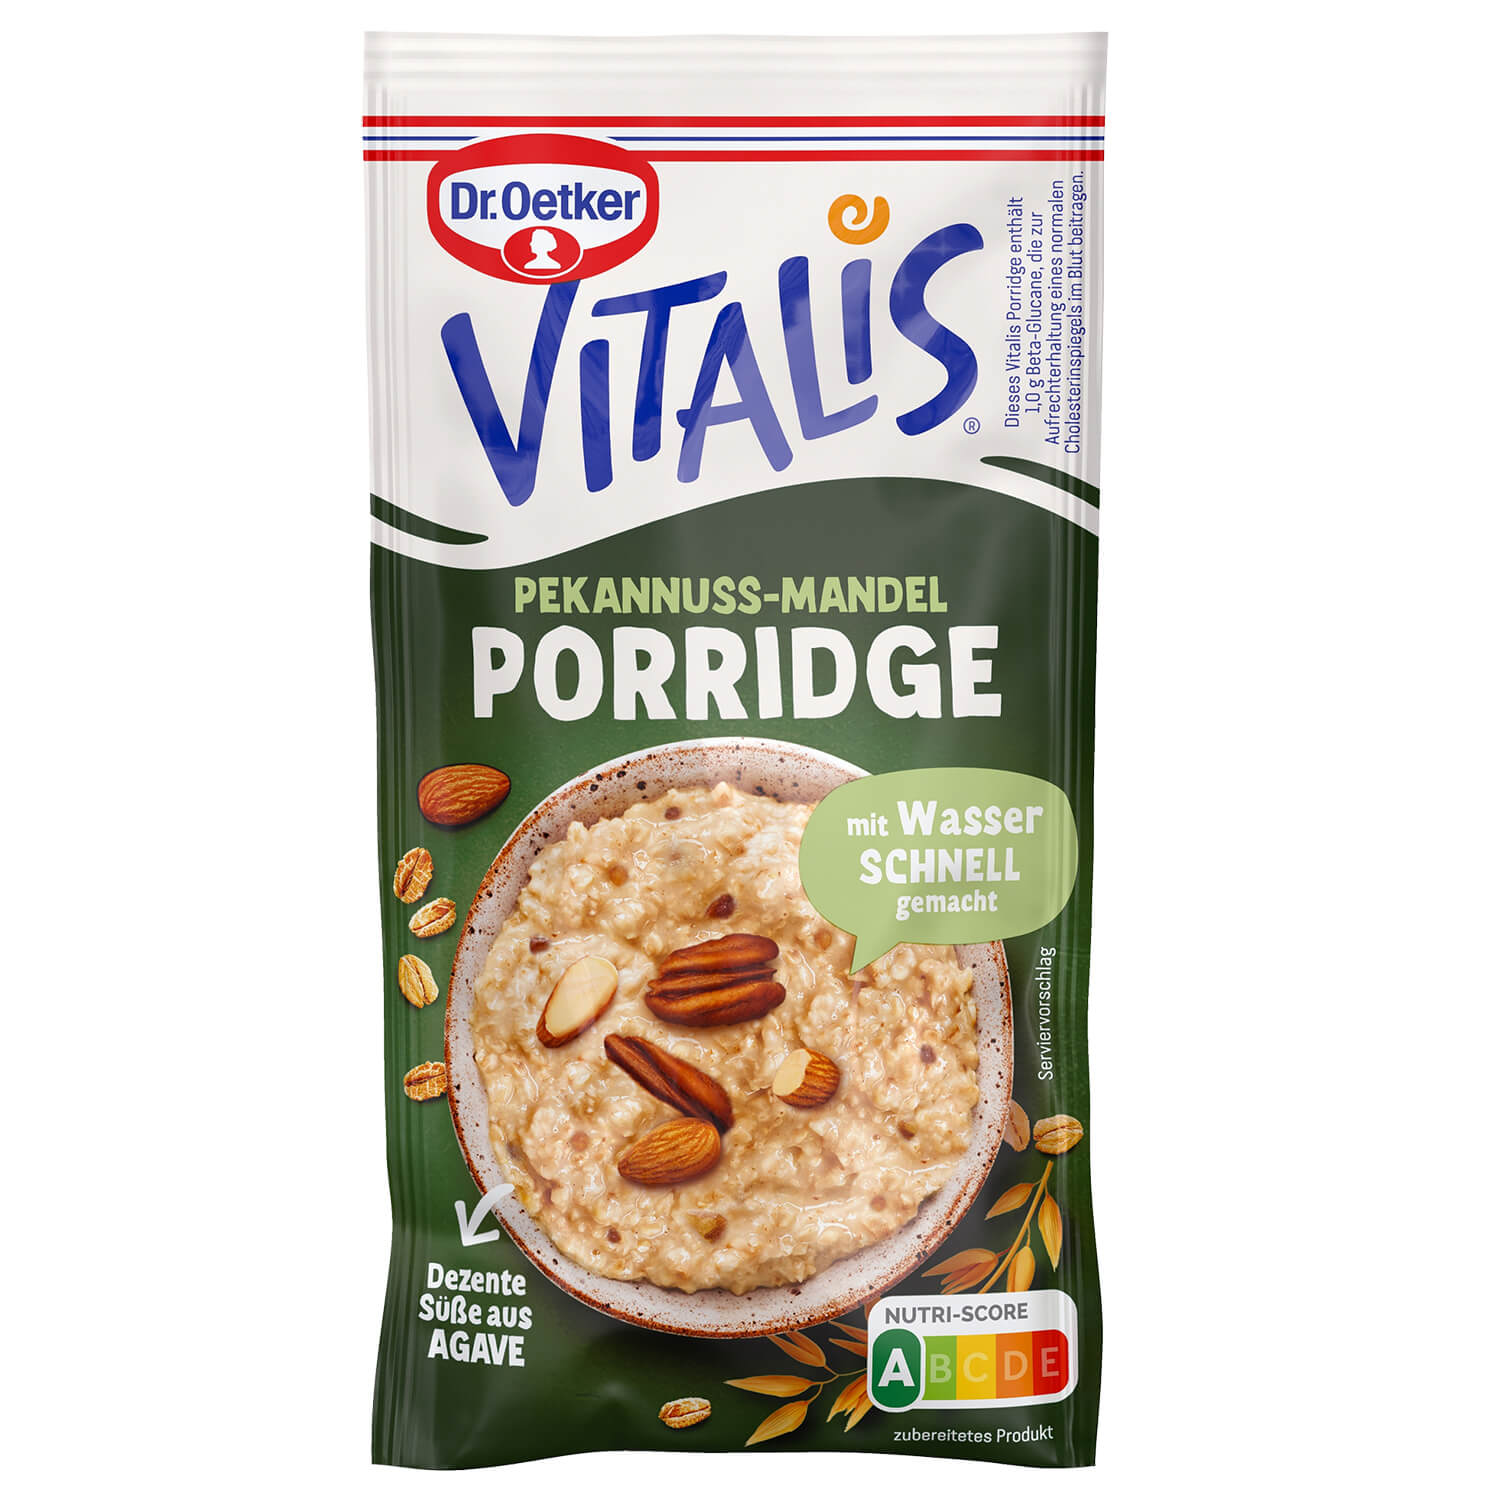 Dr. Oetker Vitalis Porridge Pekannuss-Mandel 61g Beutel